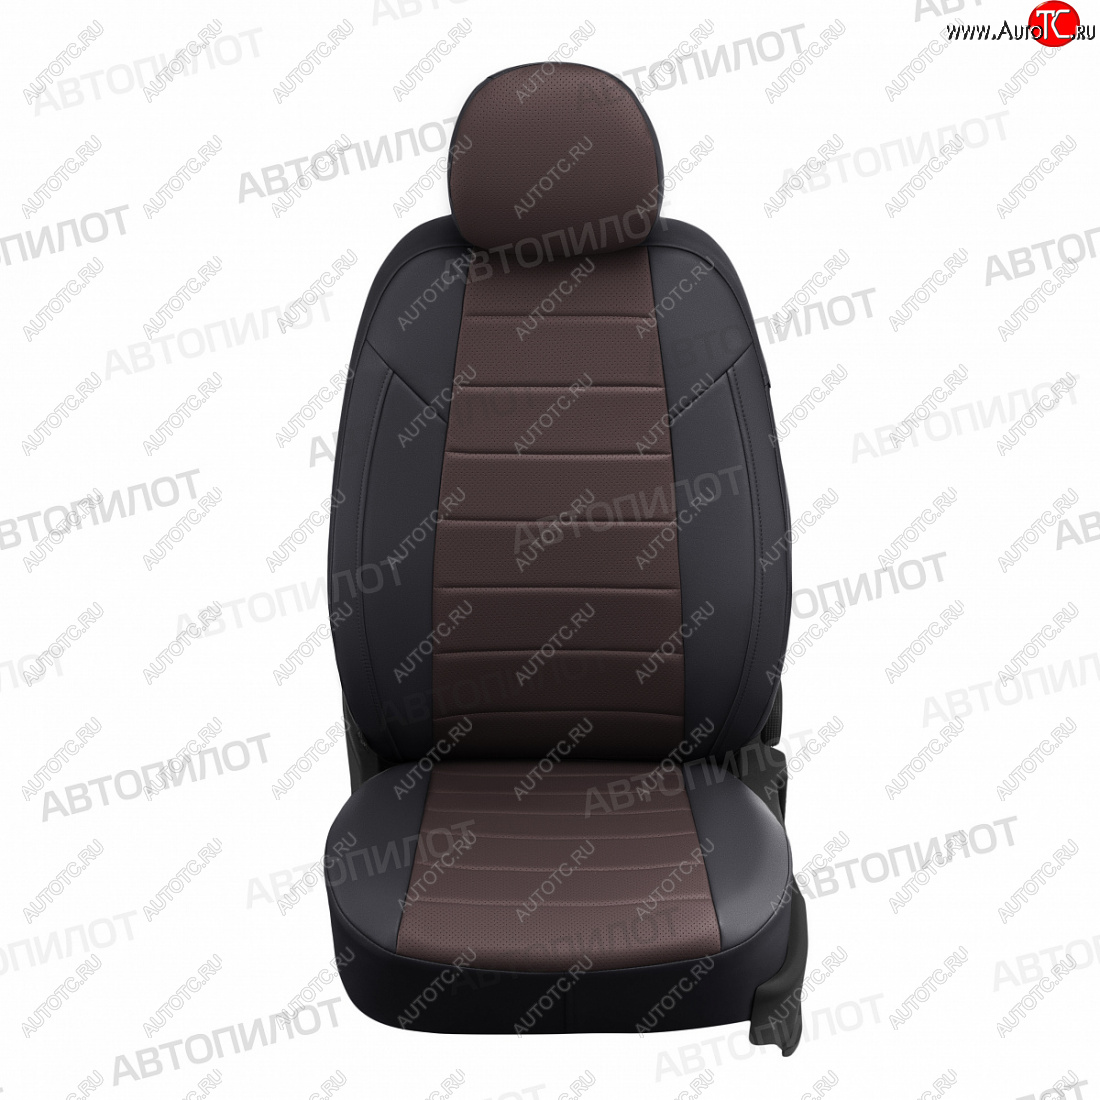 20 999 р. Чехлы сидений (экокожа, 8 мест) Автопилот  KIA Carnival  KA4 (2020-2024) (черный/шоколад)